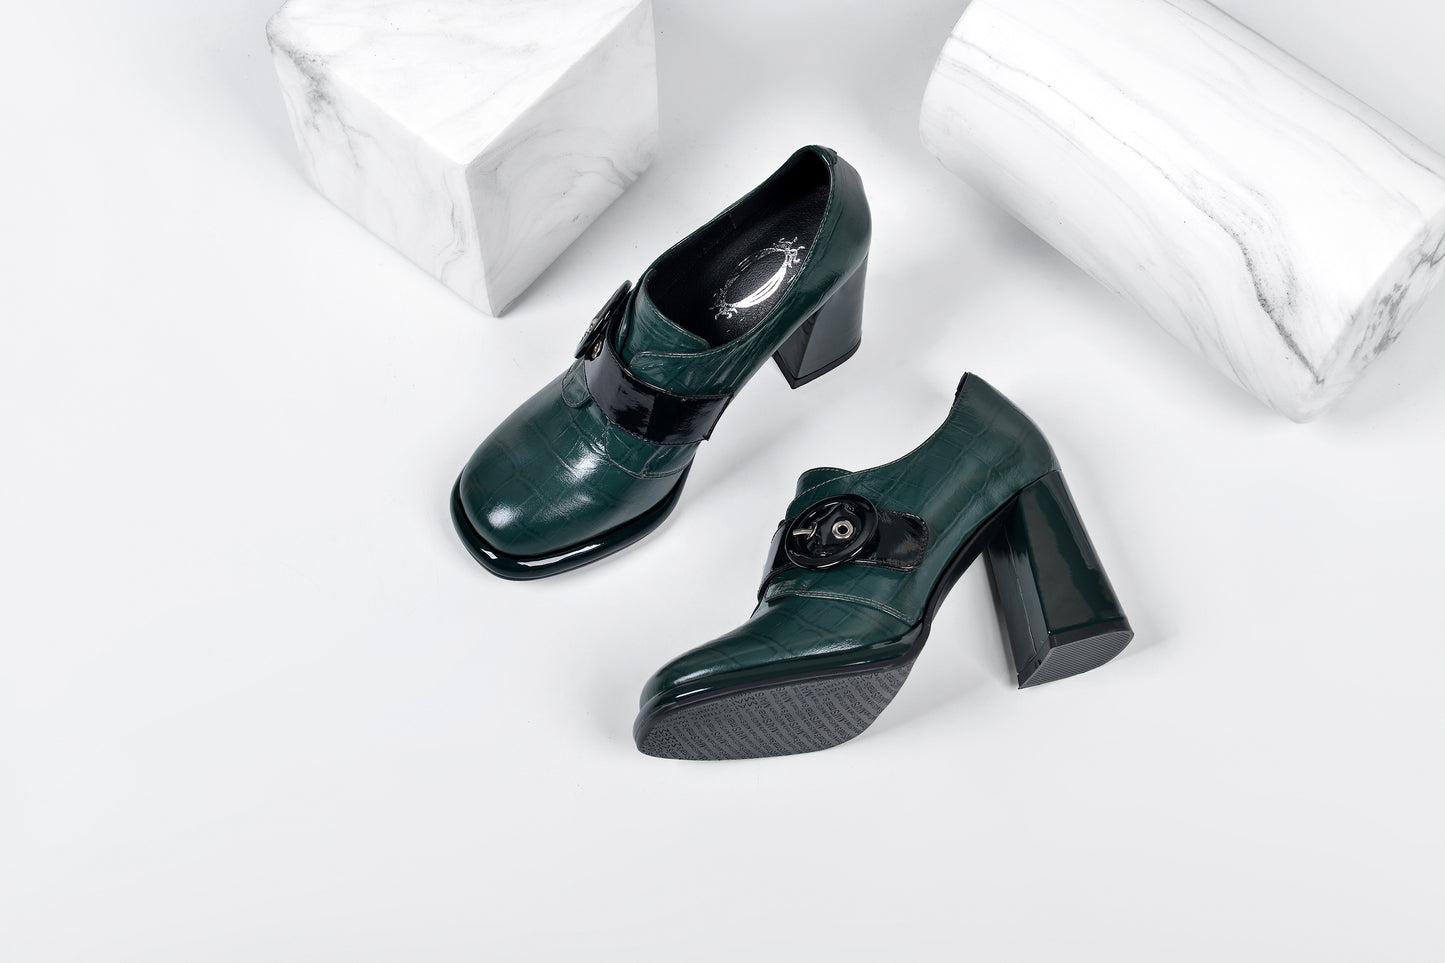 TinaCus Women's Handmade Genuine Leather Round Toe Buckled Trendy Platform High Chunky Heel Slip On Pumps